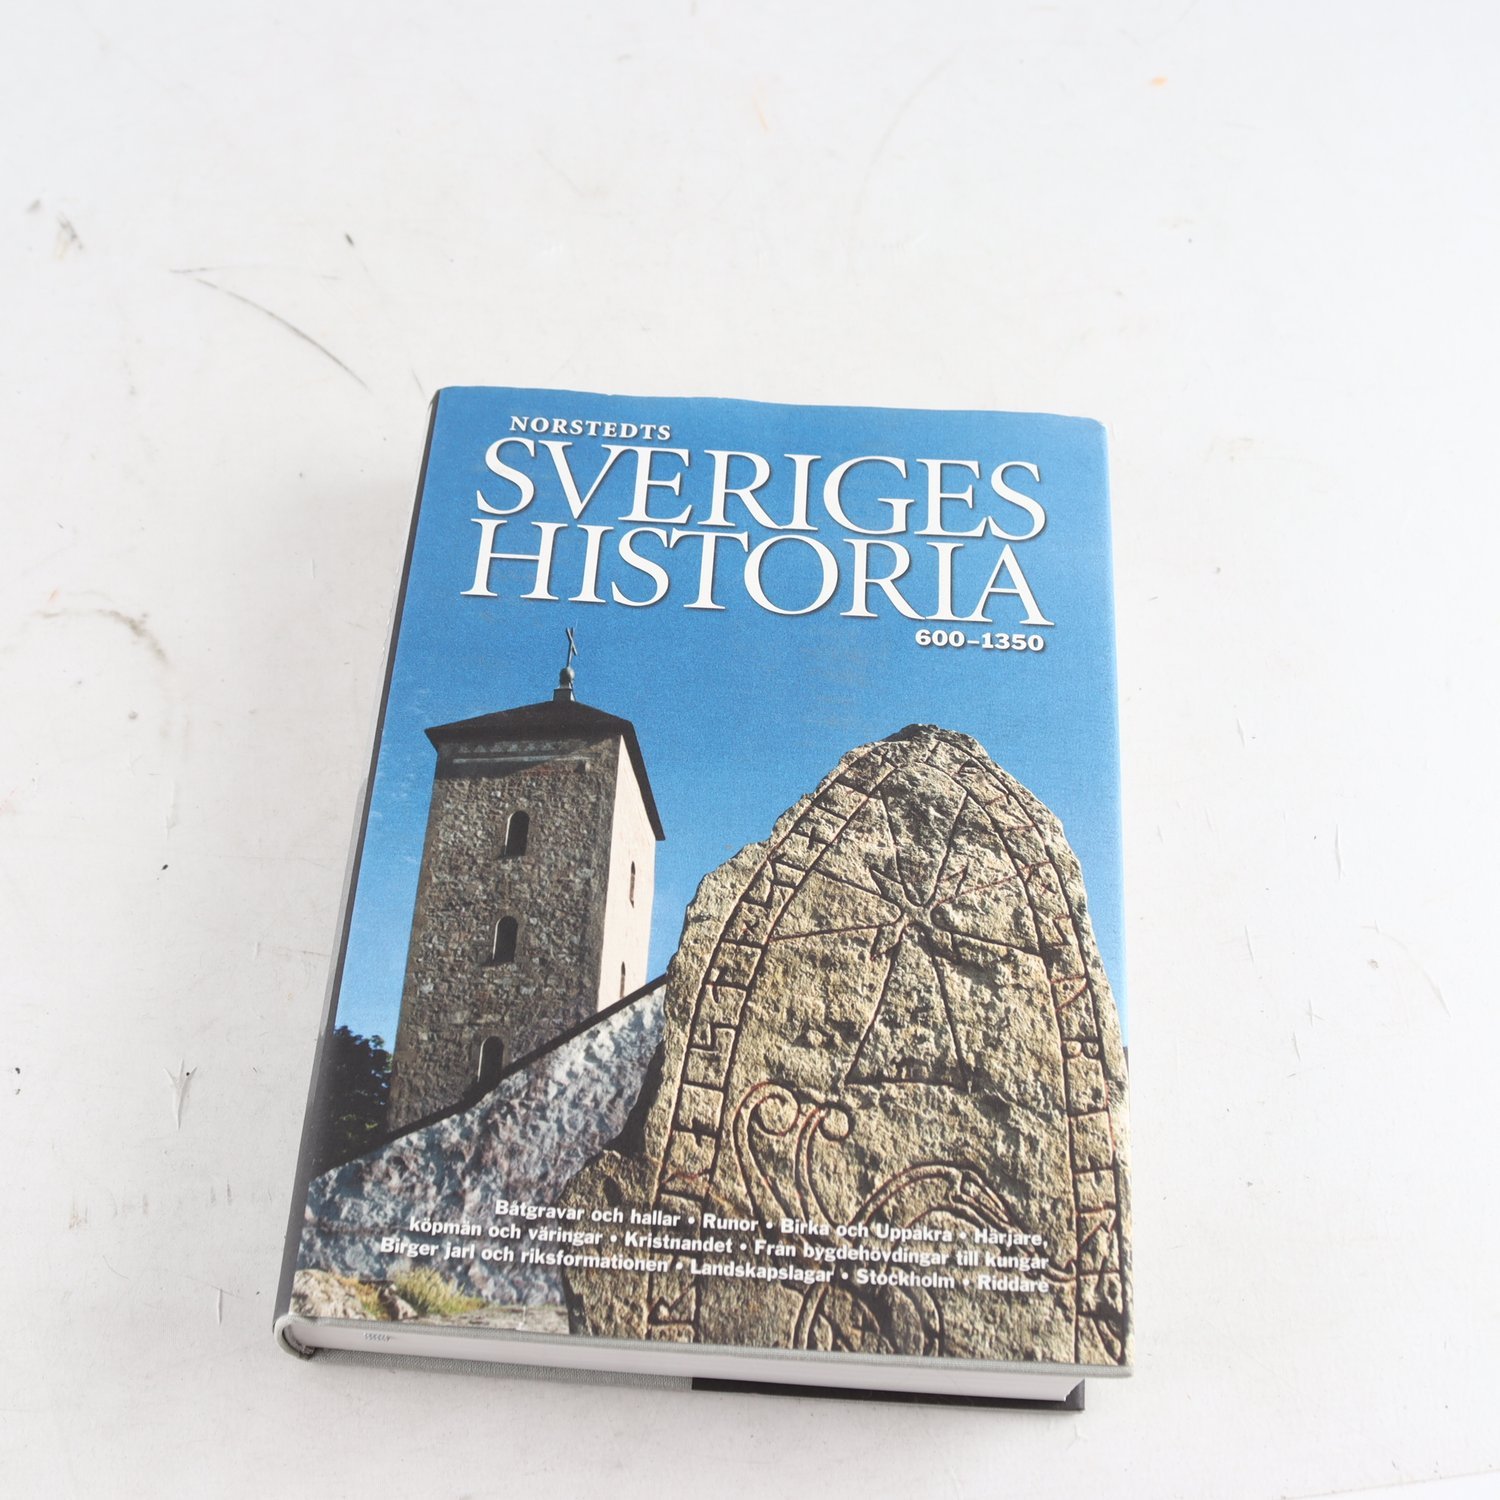 Norstedts Sveriges historia 600-1350, Dick Harrison